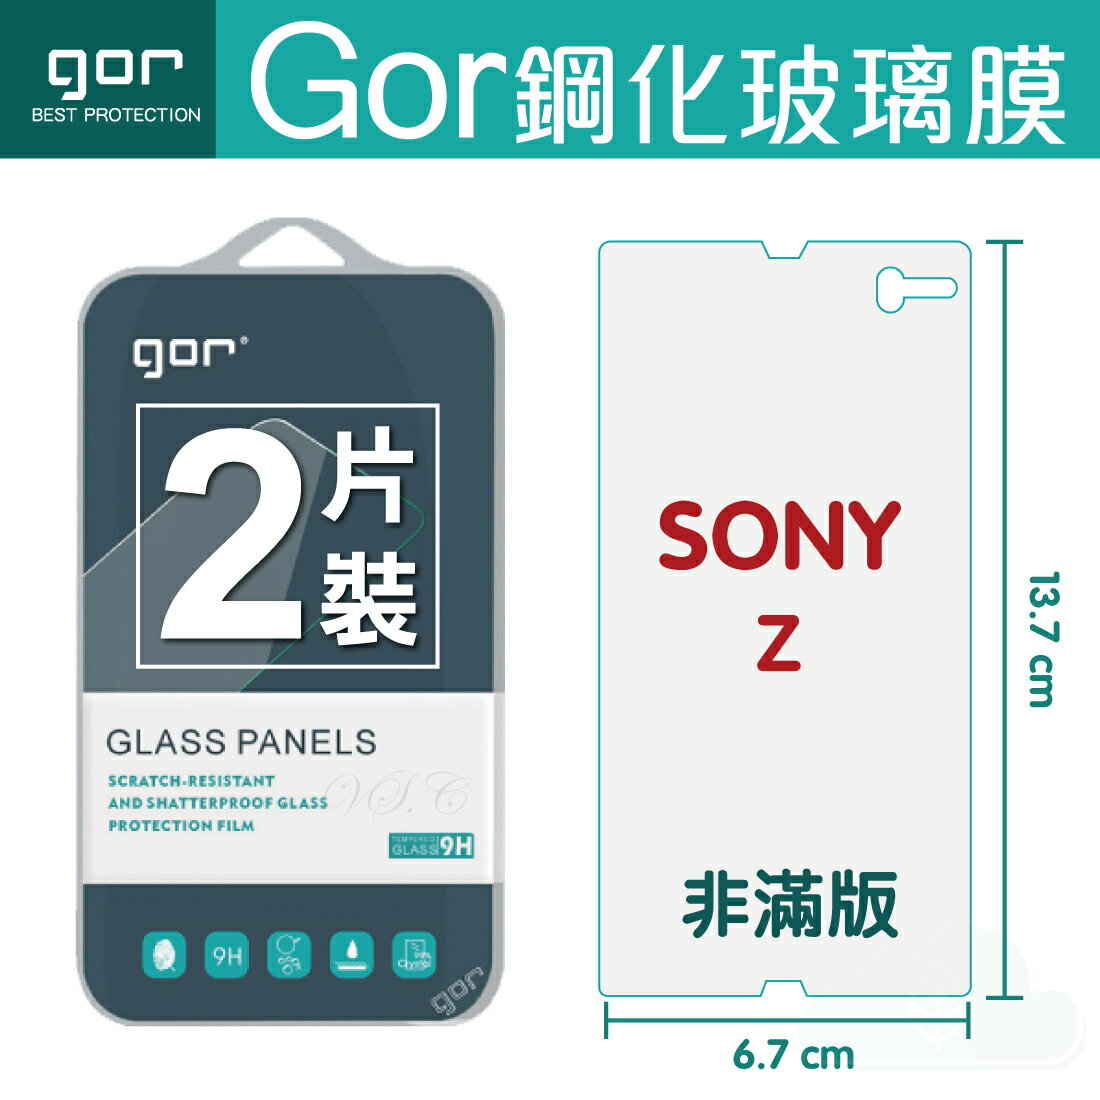 【SONY】GOR 9H Xperia Z (C6602) 鋼化 玻璃 保護貼 全透明非滿版 兩片裝【全館滿299免運費】